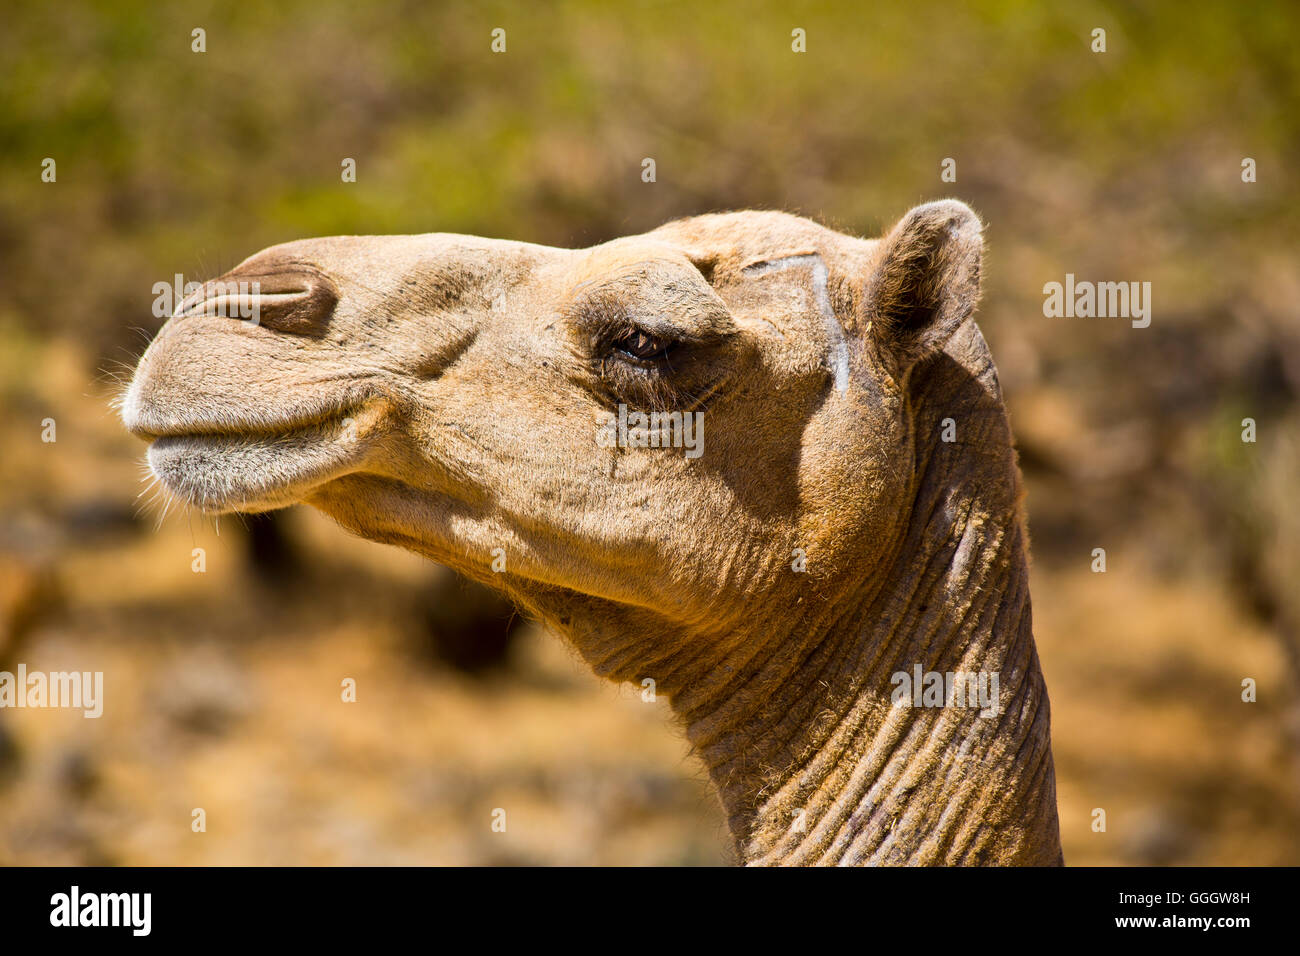 zoology, mammal (mammalia), Oman, Sultanate of Oman, Salalah, wadi Darbat, Dhofar, Additional-Rights-Clearance-Info-Not-Available Stock Photo